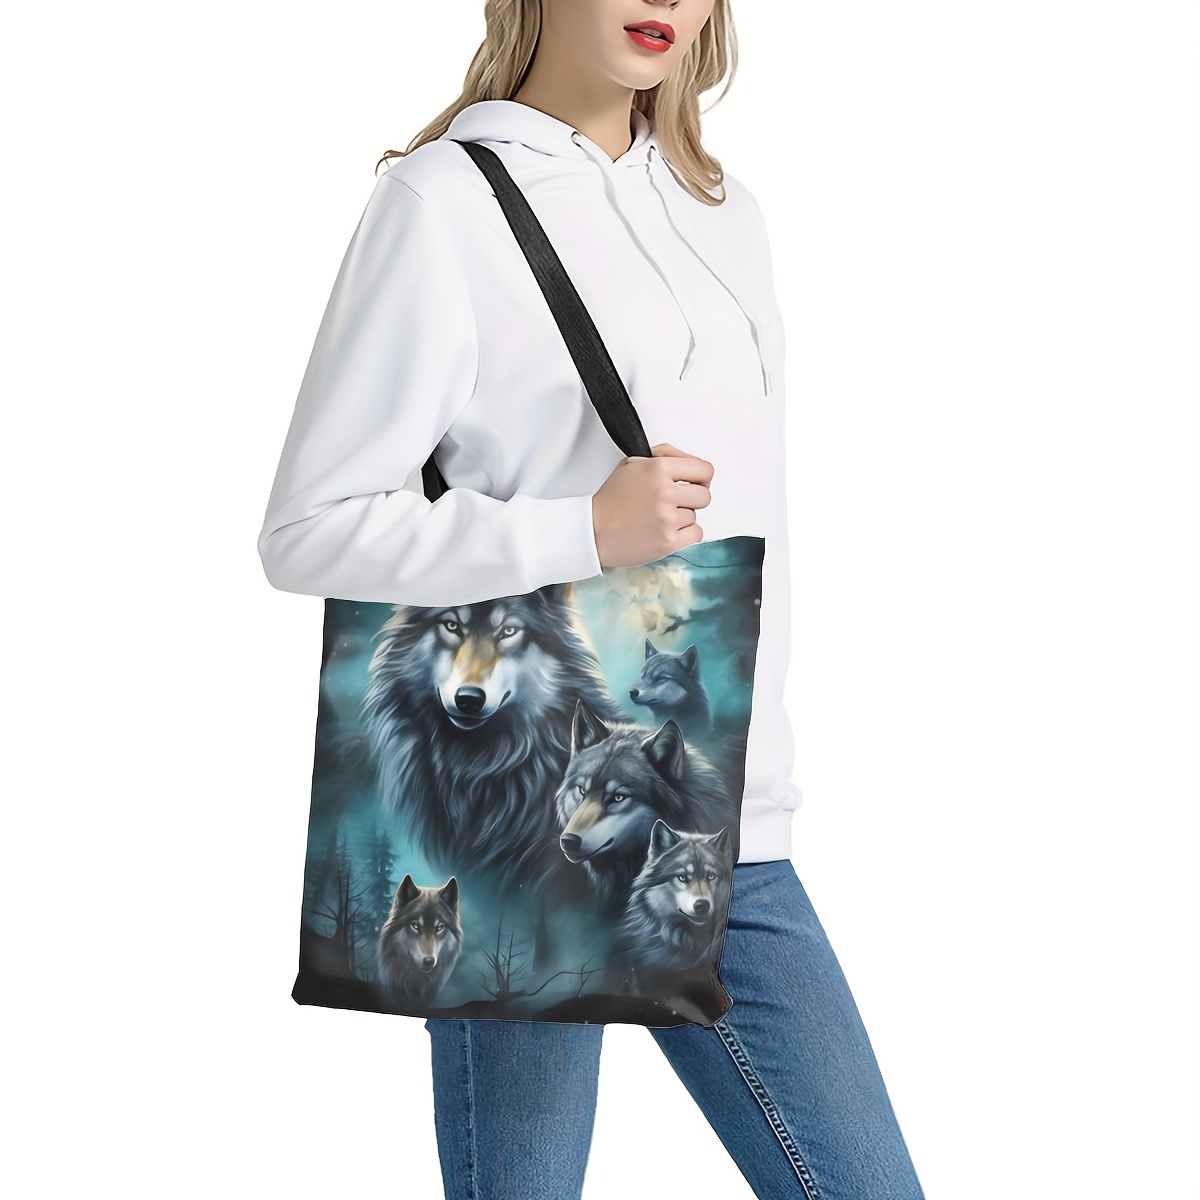 

Wolf Pattern Shoulder Bag, All-match Versatile Shopping Handbag, Lightweight Carry All Daily Use Bag